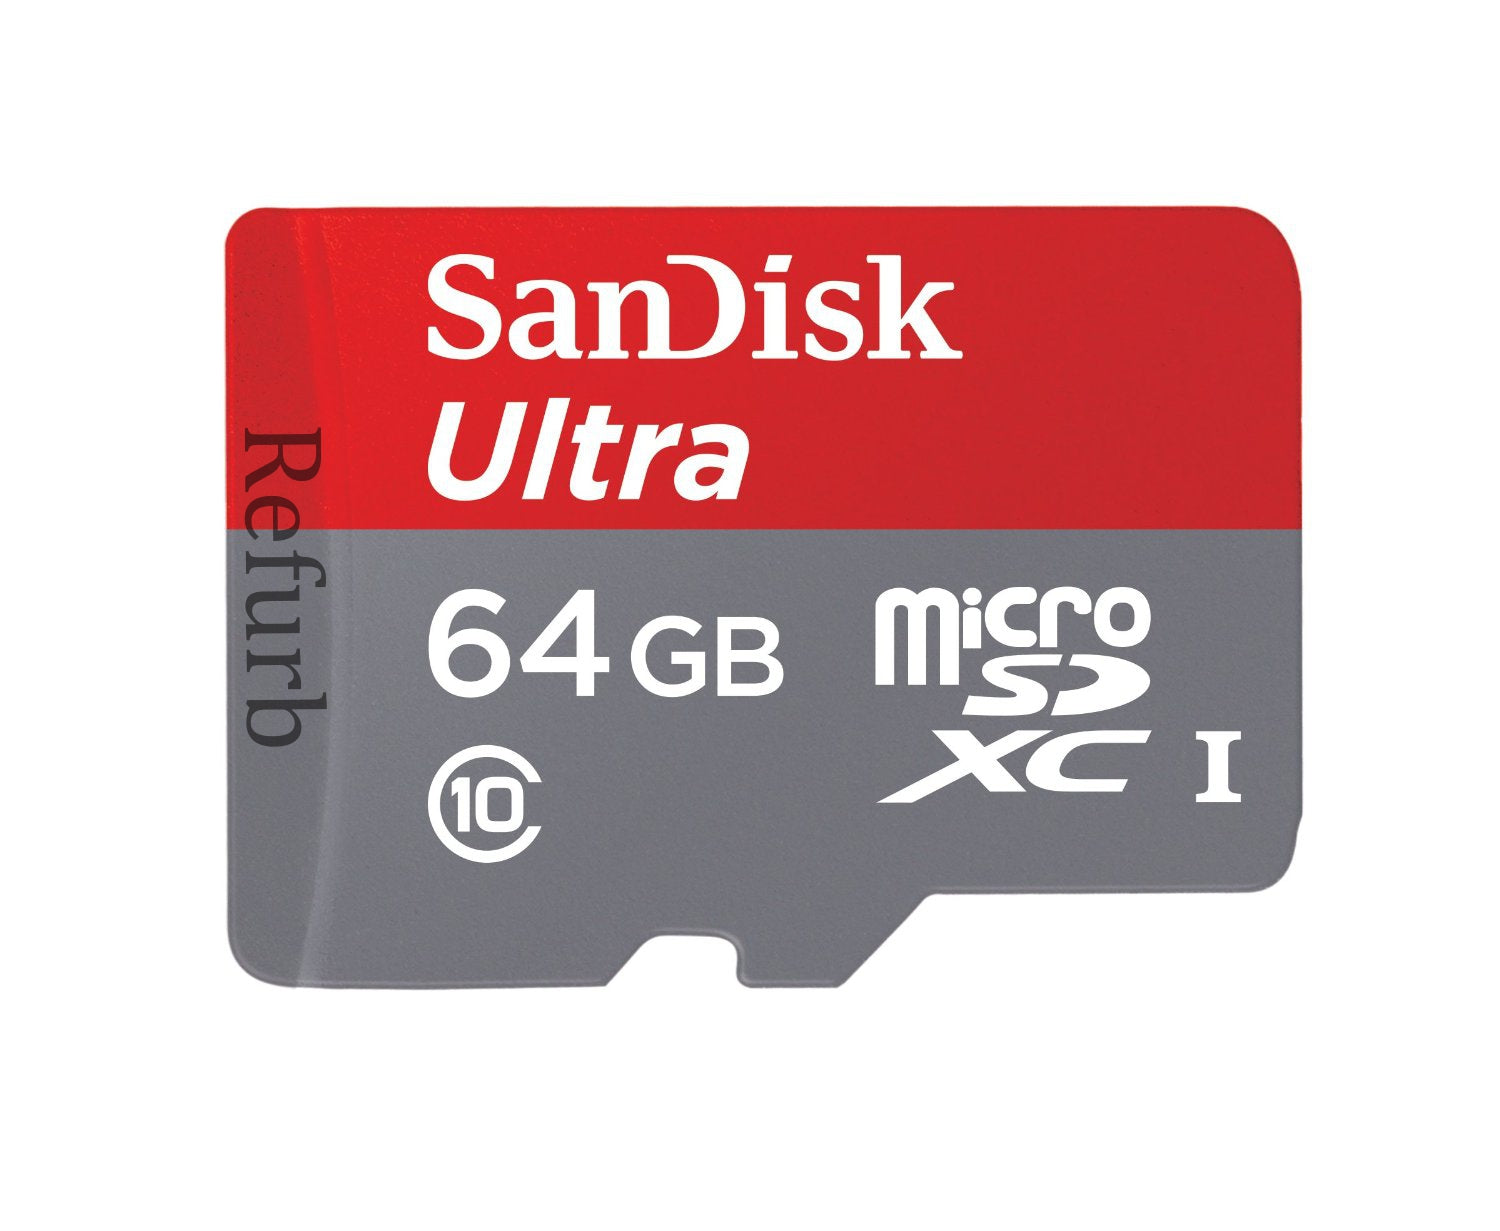 SanDisk Ultra 64GB MicroSDXC Class 10 UHS-1 SDSDQUA-064G-U46A (Certified Refurbished)